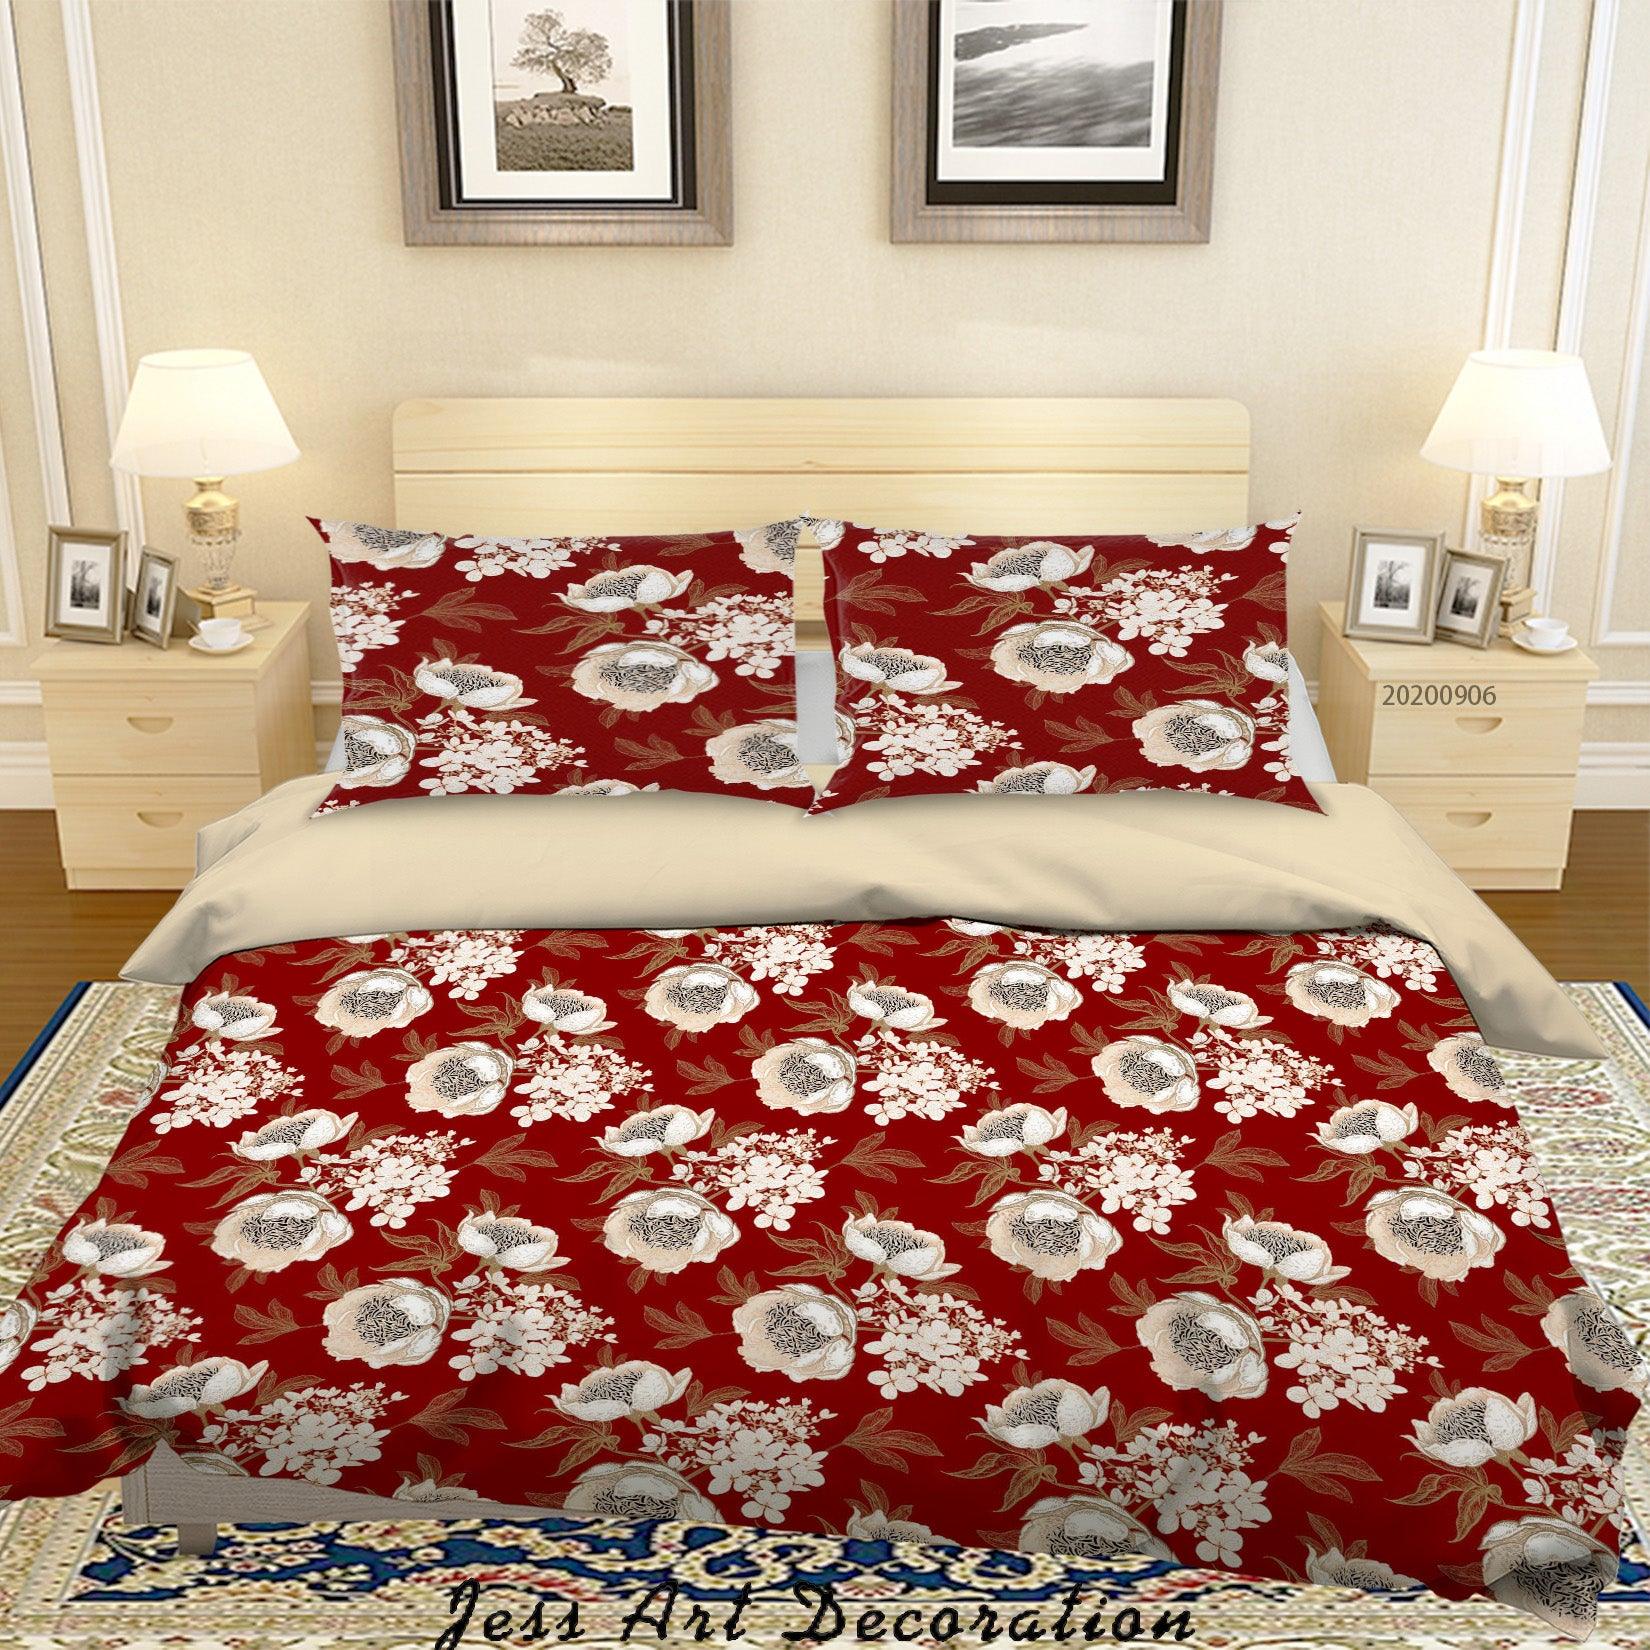 3D Vintage Leaves White Floral Pattern Quilt Cover Set Bedding Set Duvet Cover Pillowcases WJ 3641- Jess Art Decoration